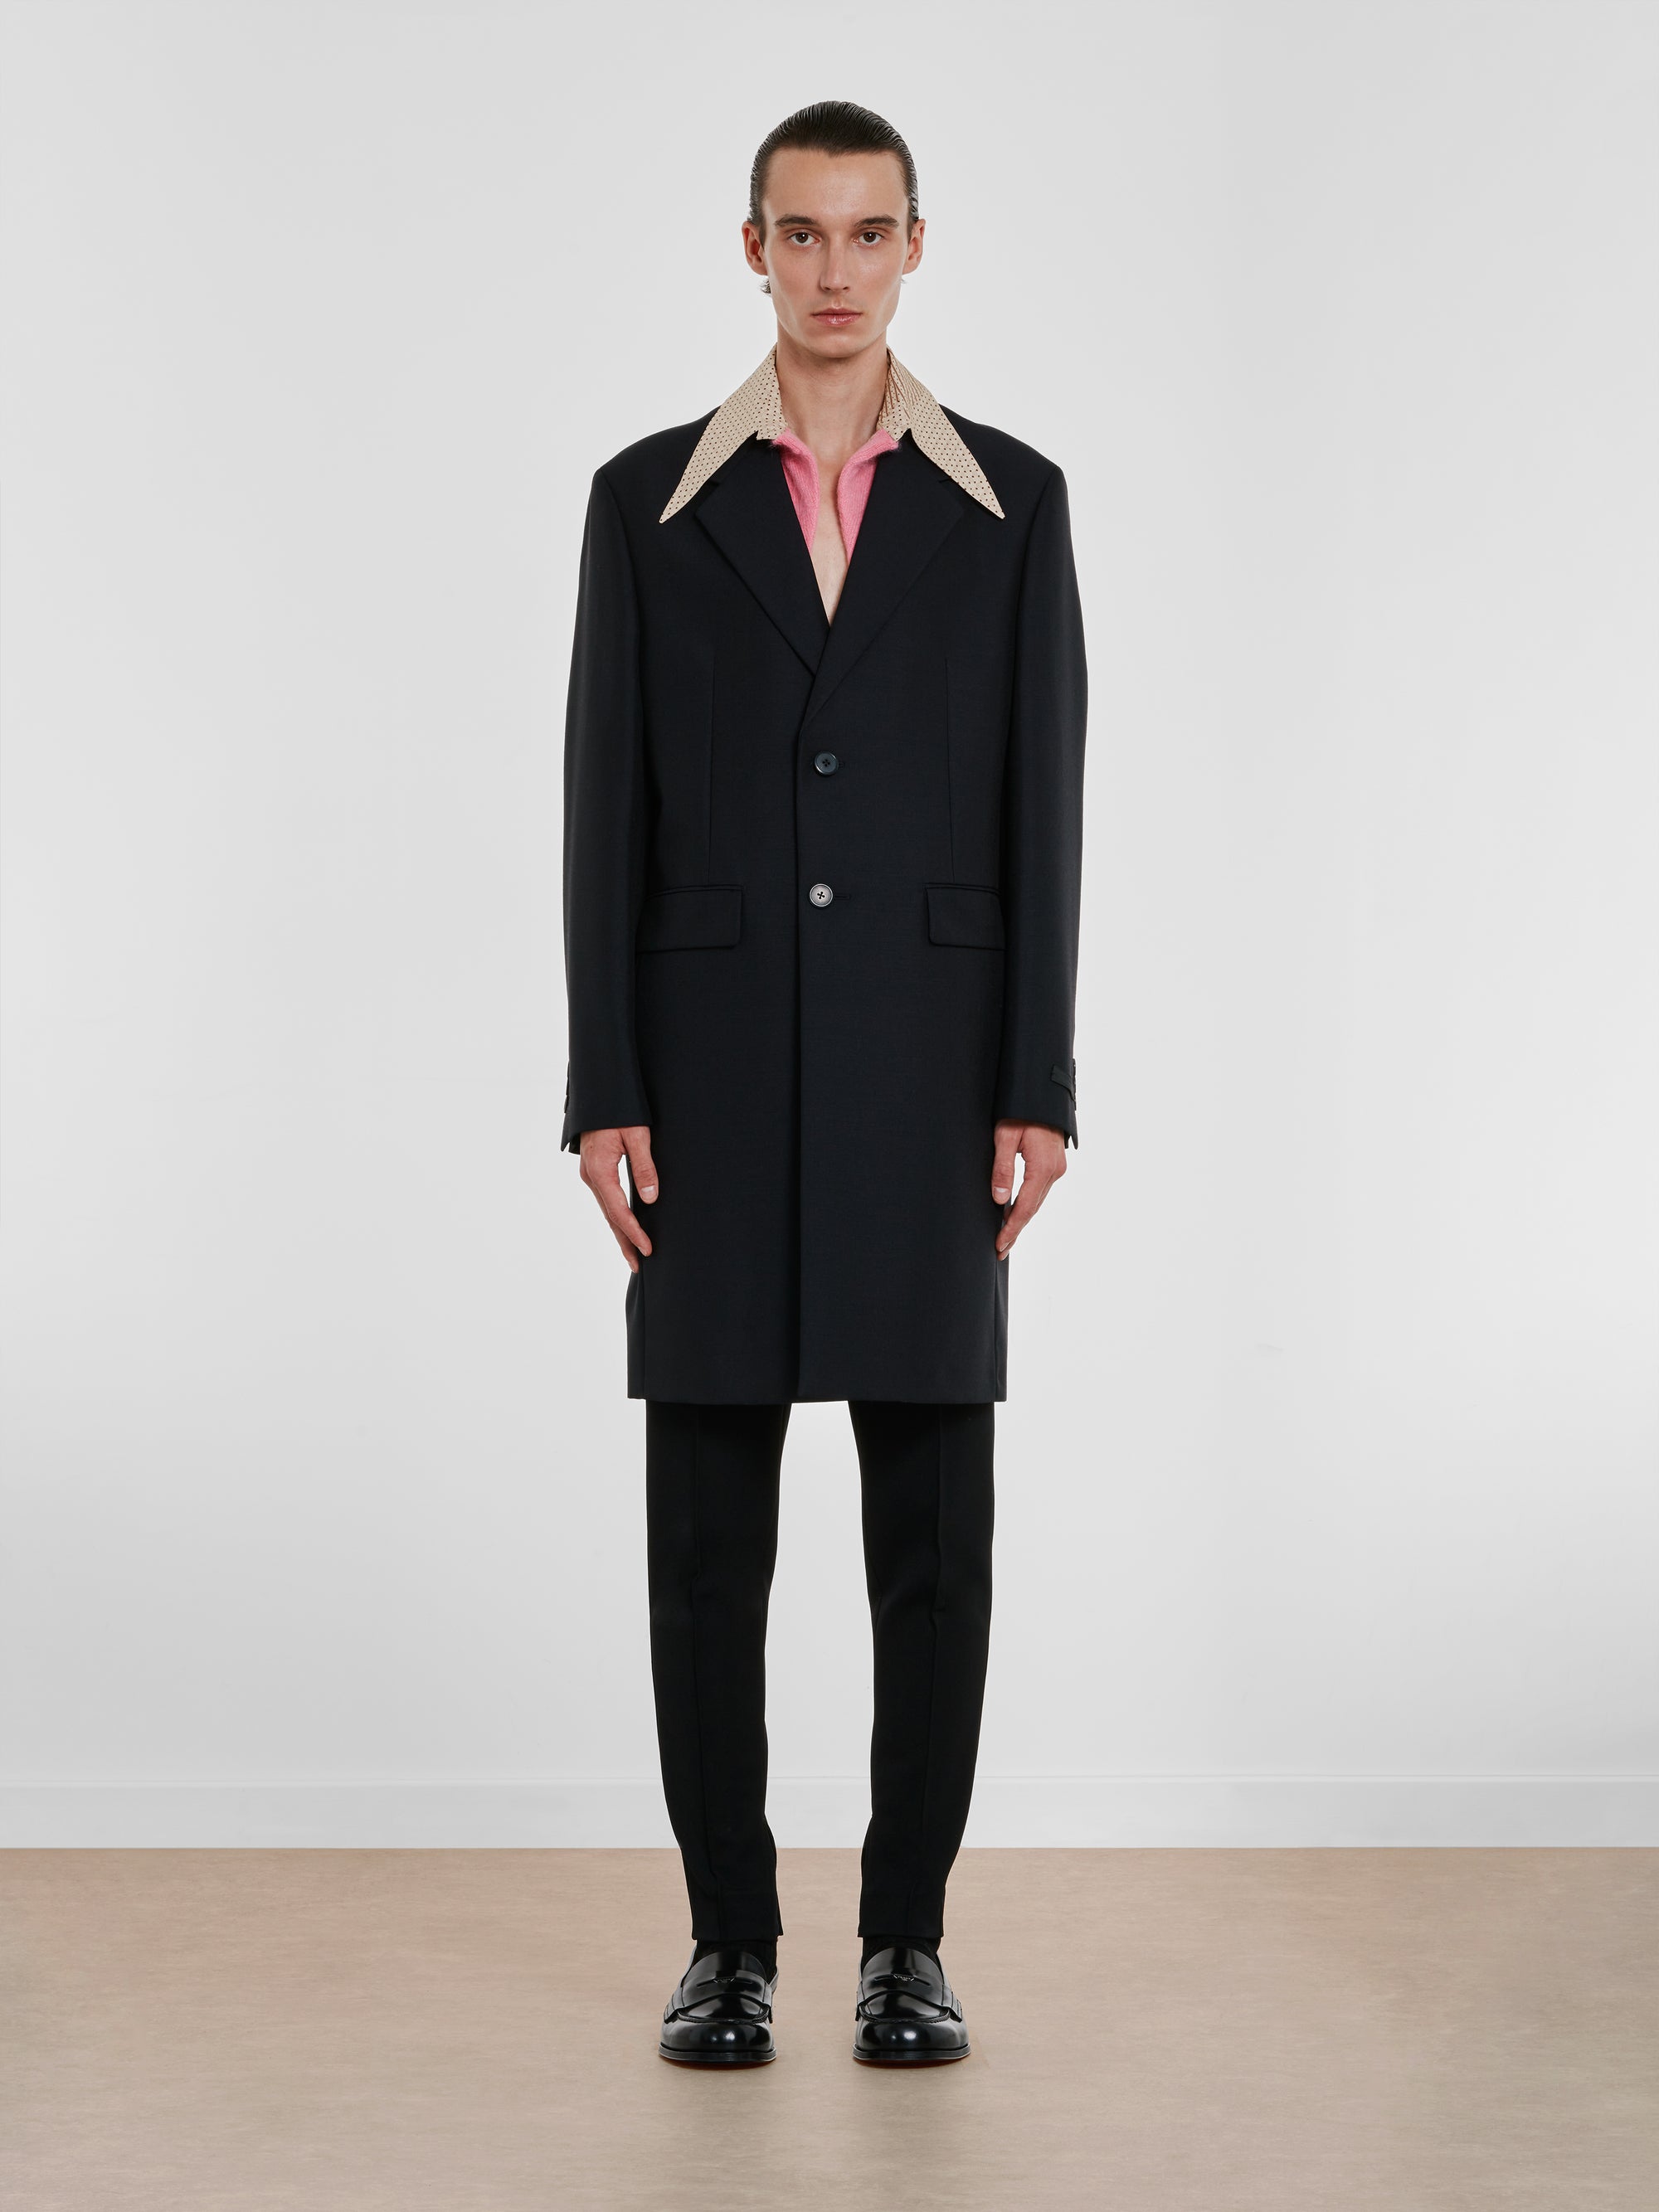 Prada - Men's Coat With Detachable Collar - (Black) view 2